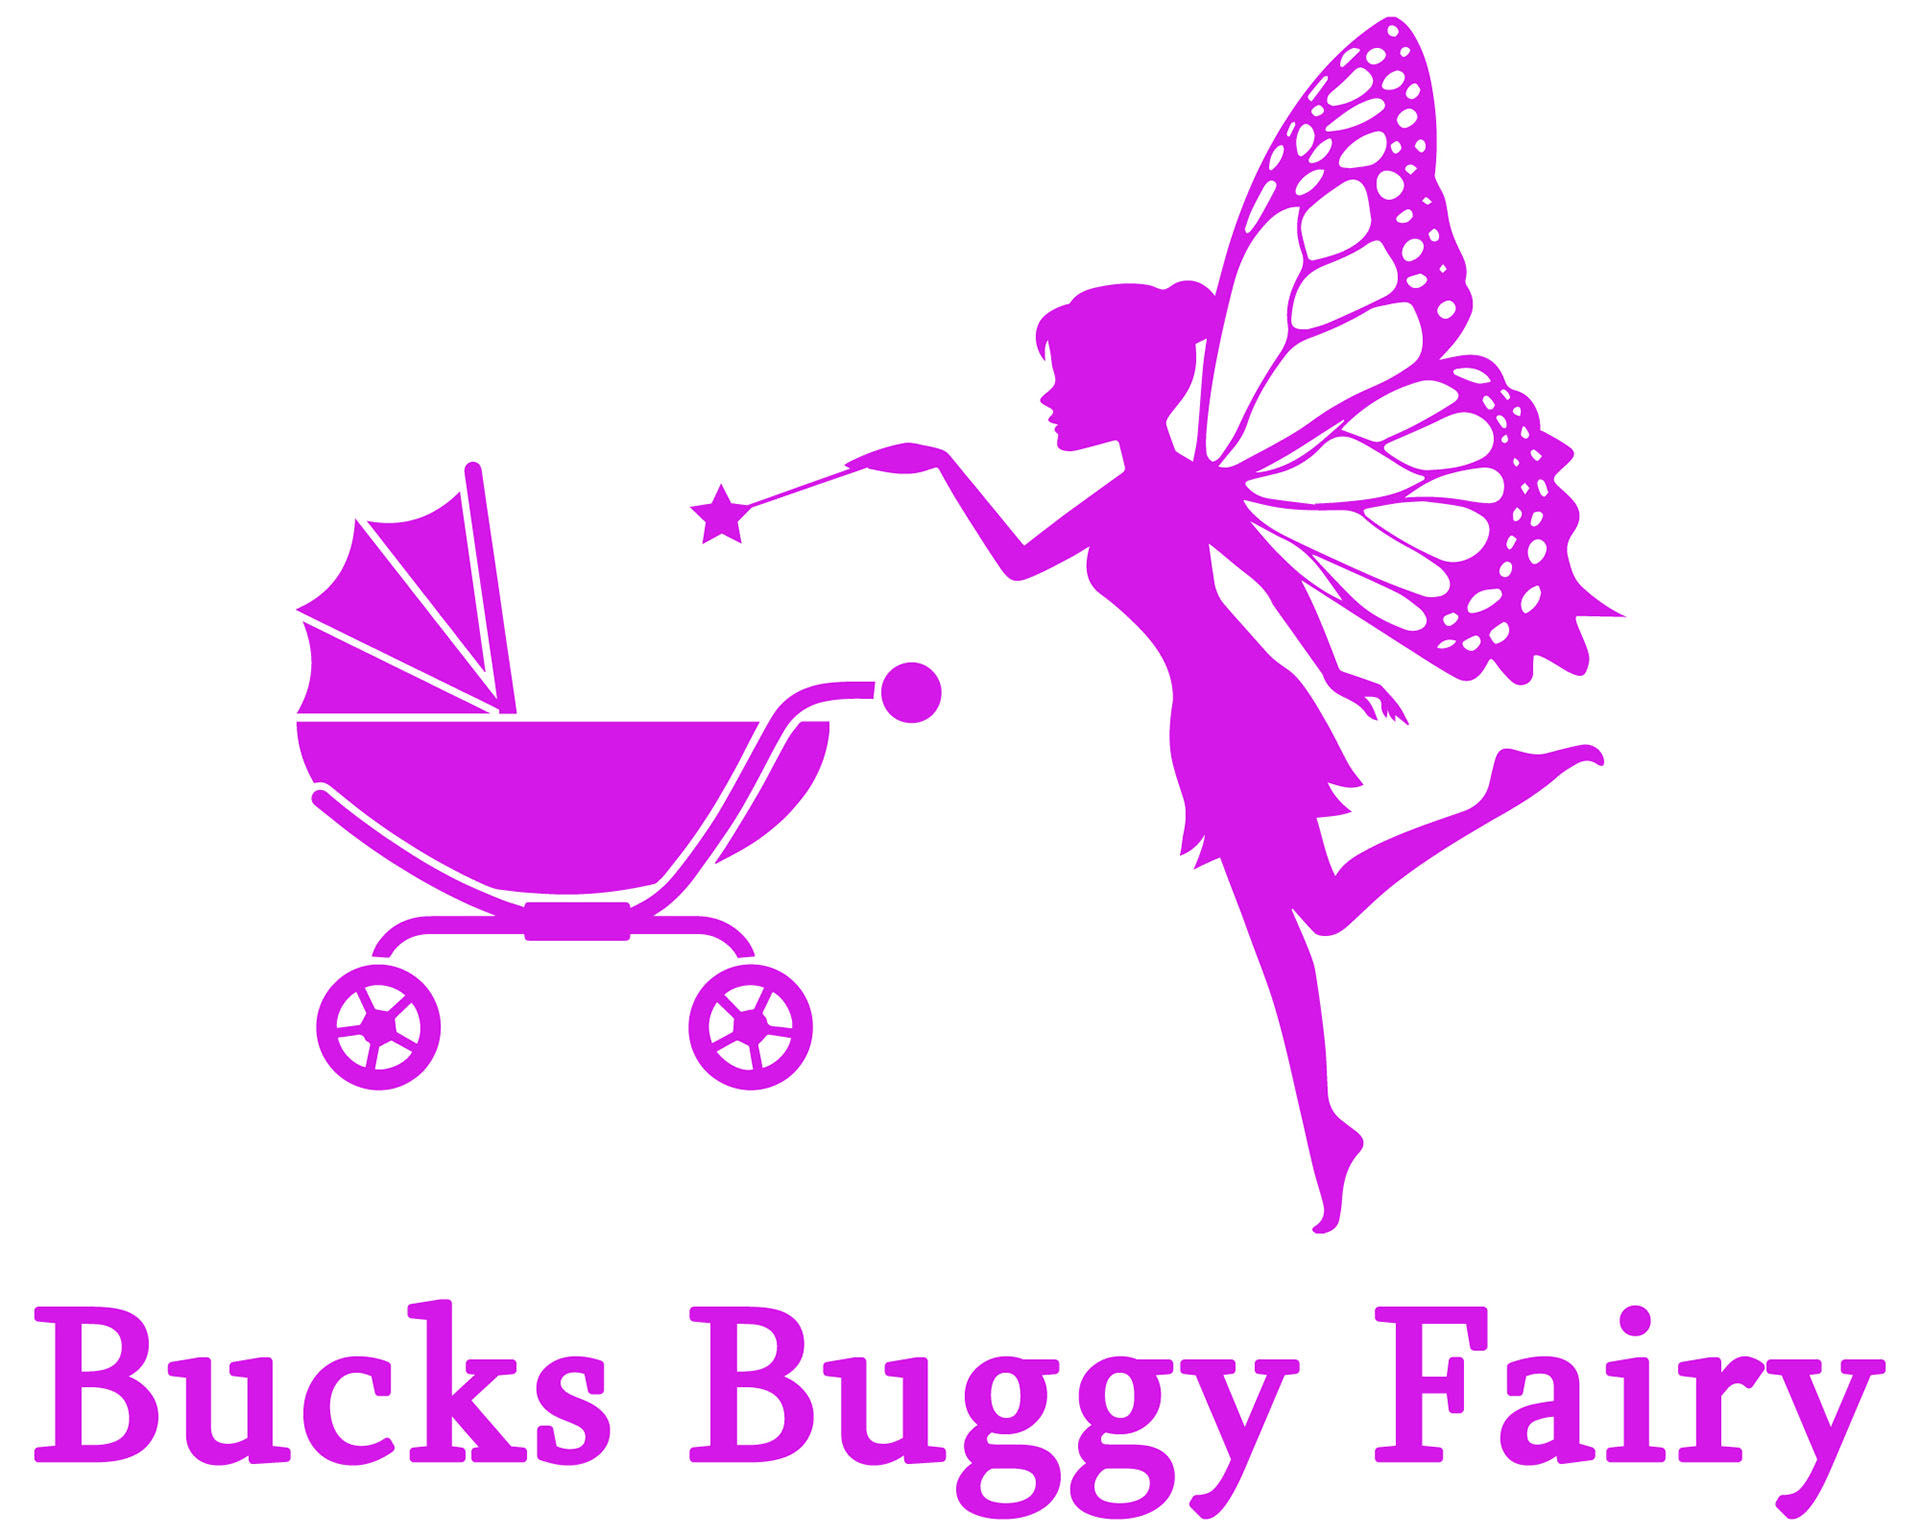 Bucks Buggy Fairy's logo